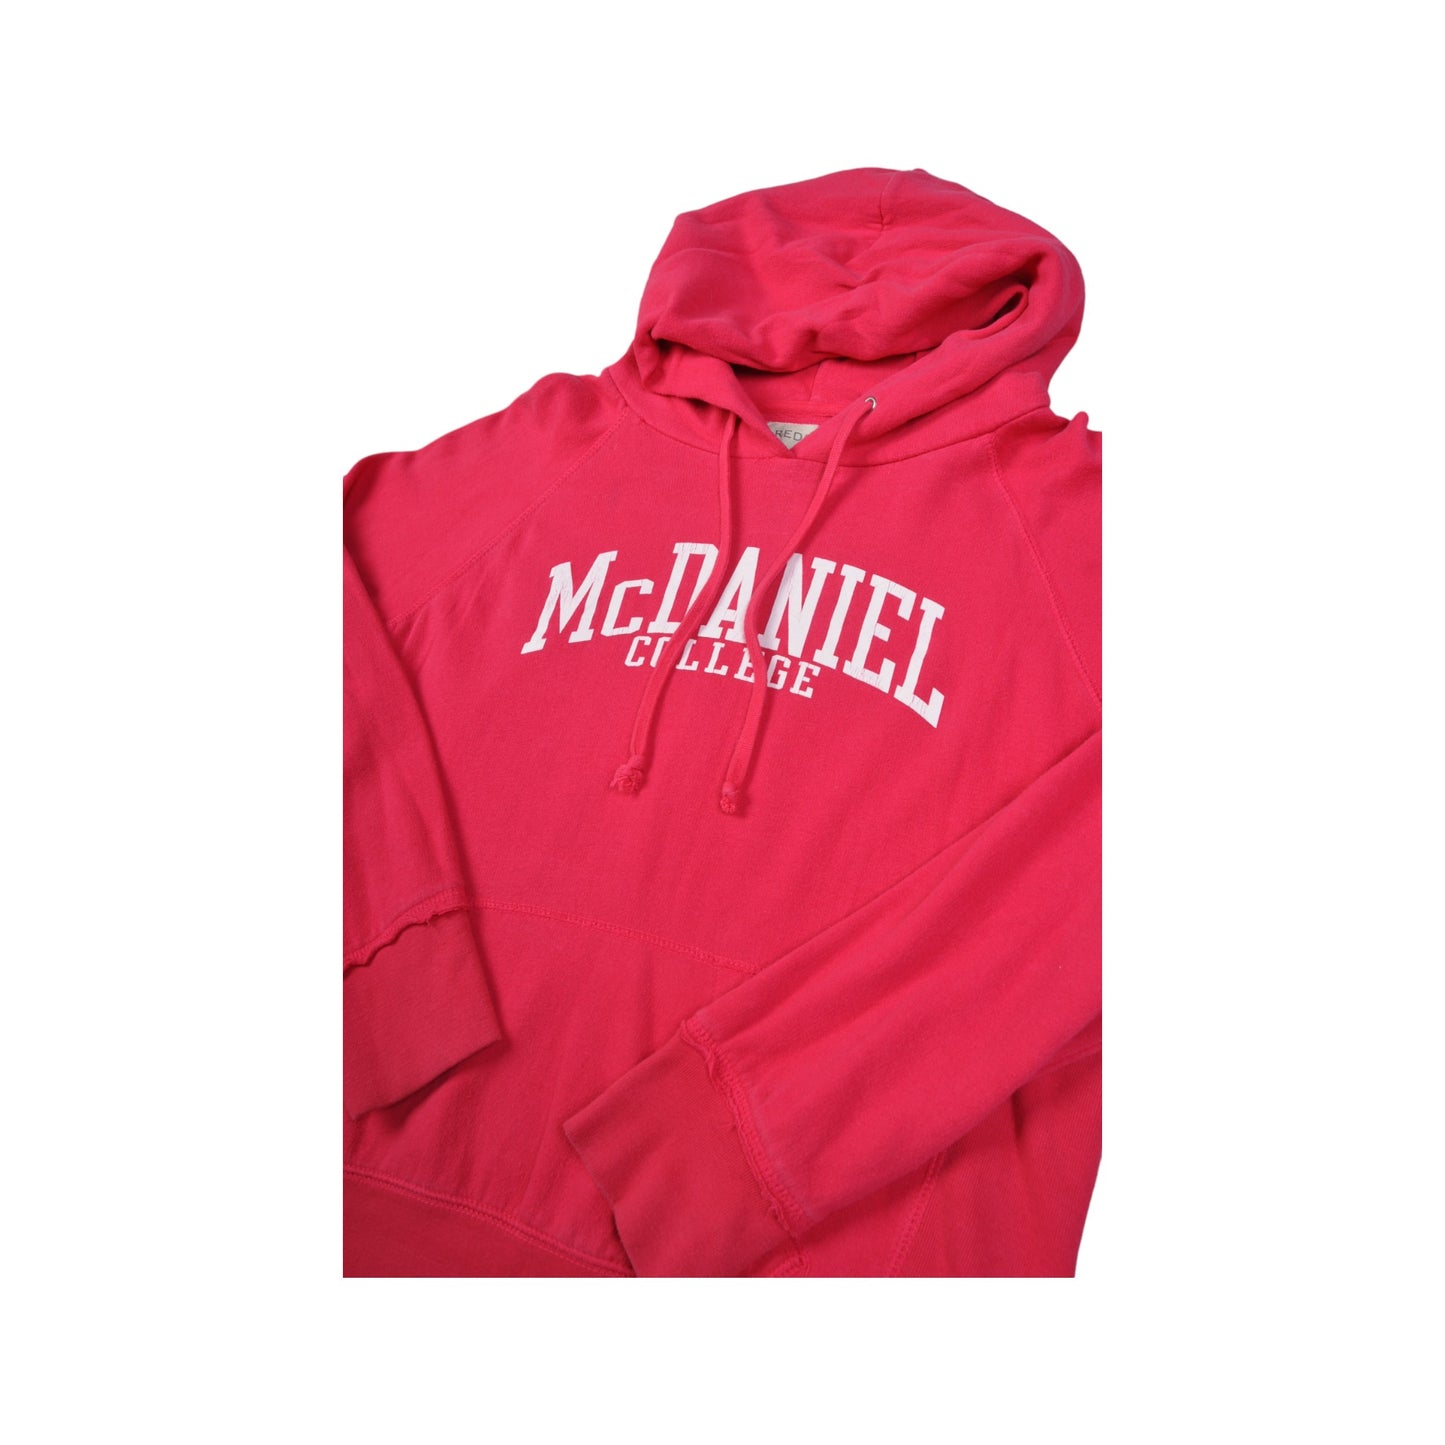 Vintage Mc Daniel College Sweater Pink Ladies Large